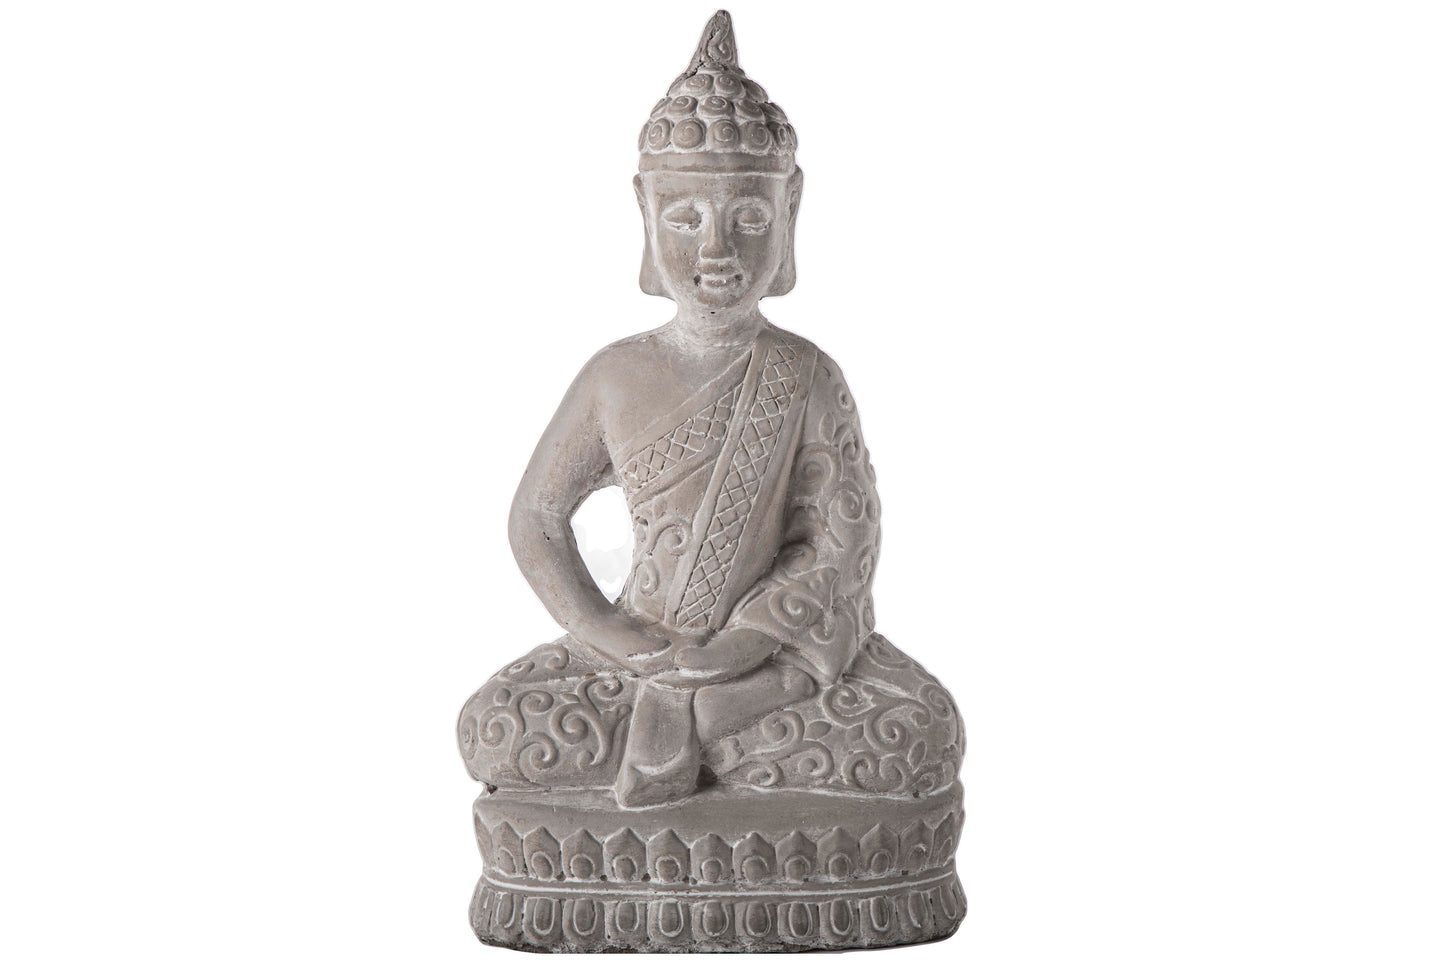 12" Cement Meditating Buddha Figurine in Dhyana Mudra Position